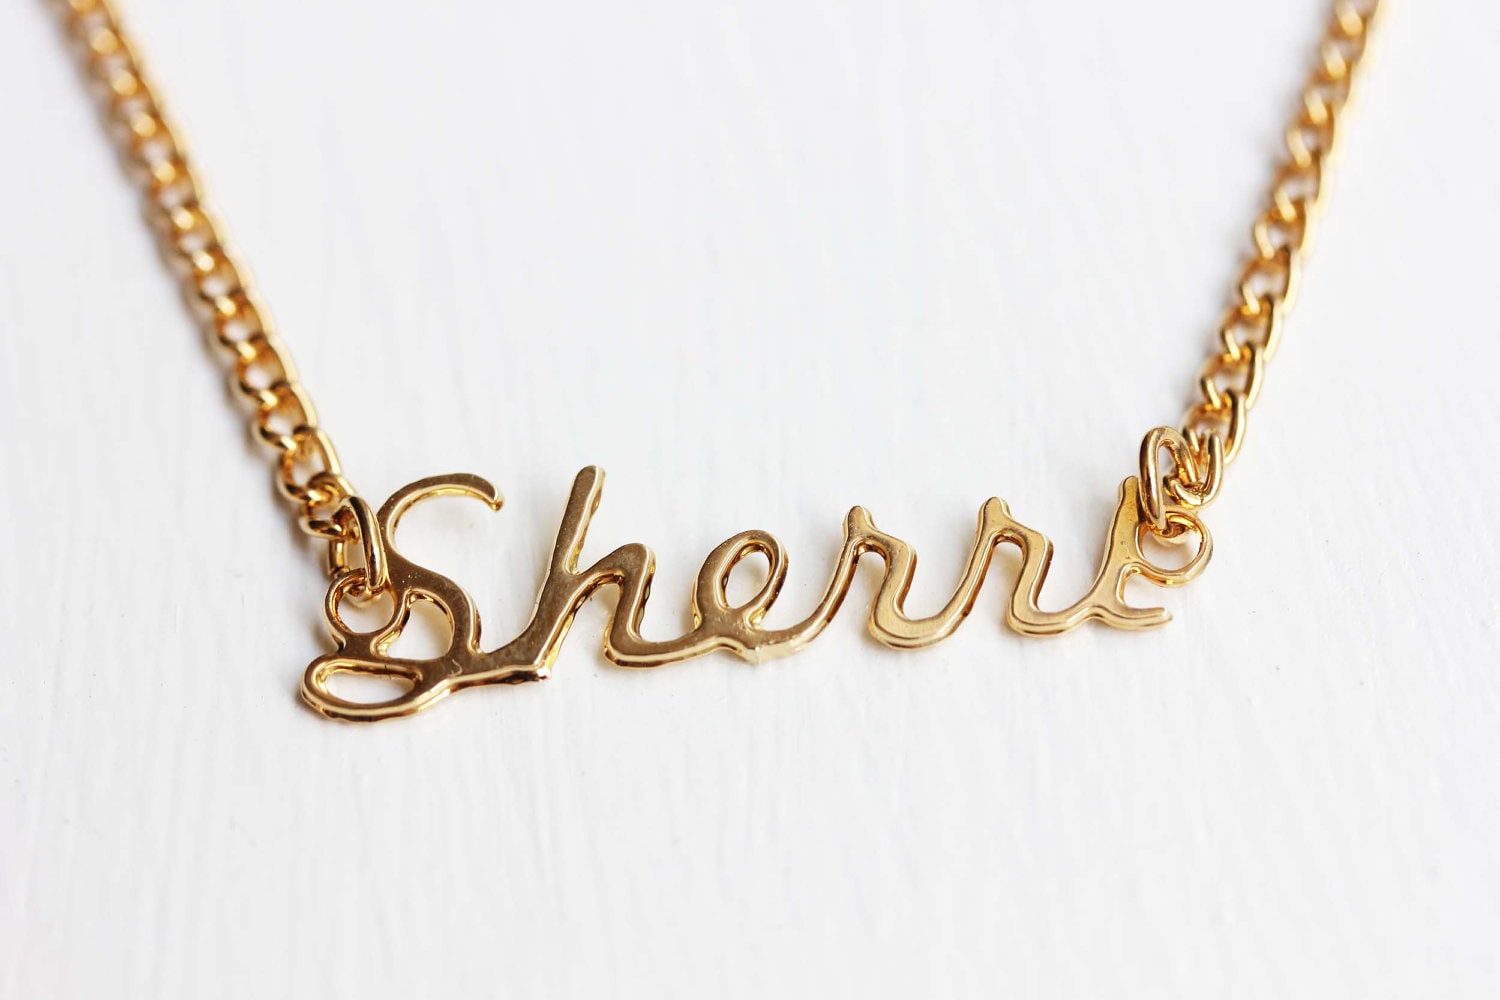 Sherri Namenskette Gold, Namenskette, Vintage Goldkette, Halskette von diamentdesigns